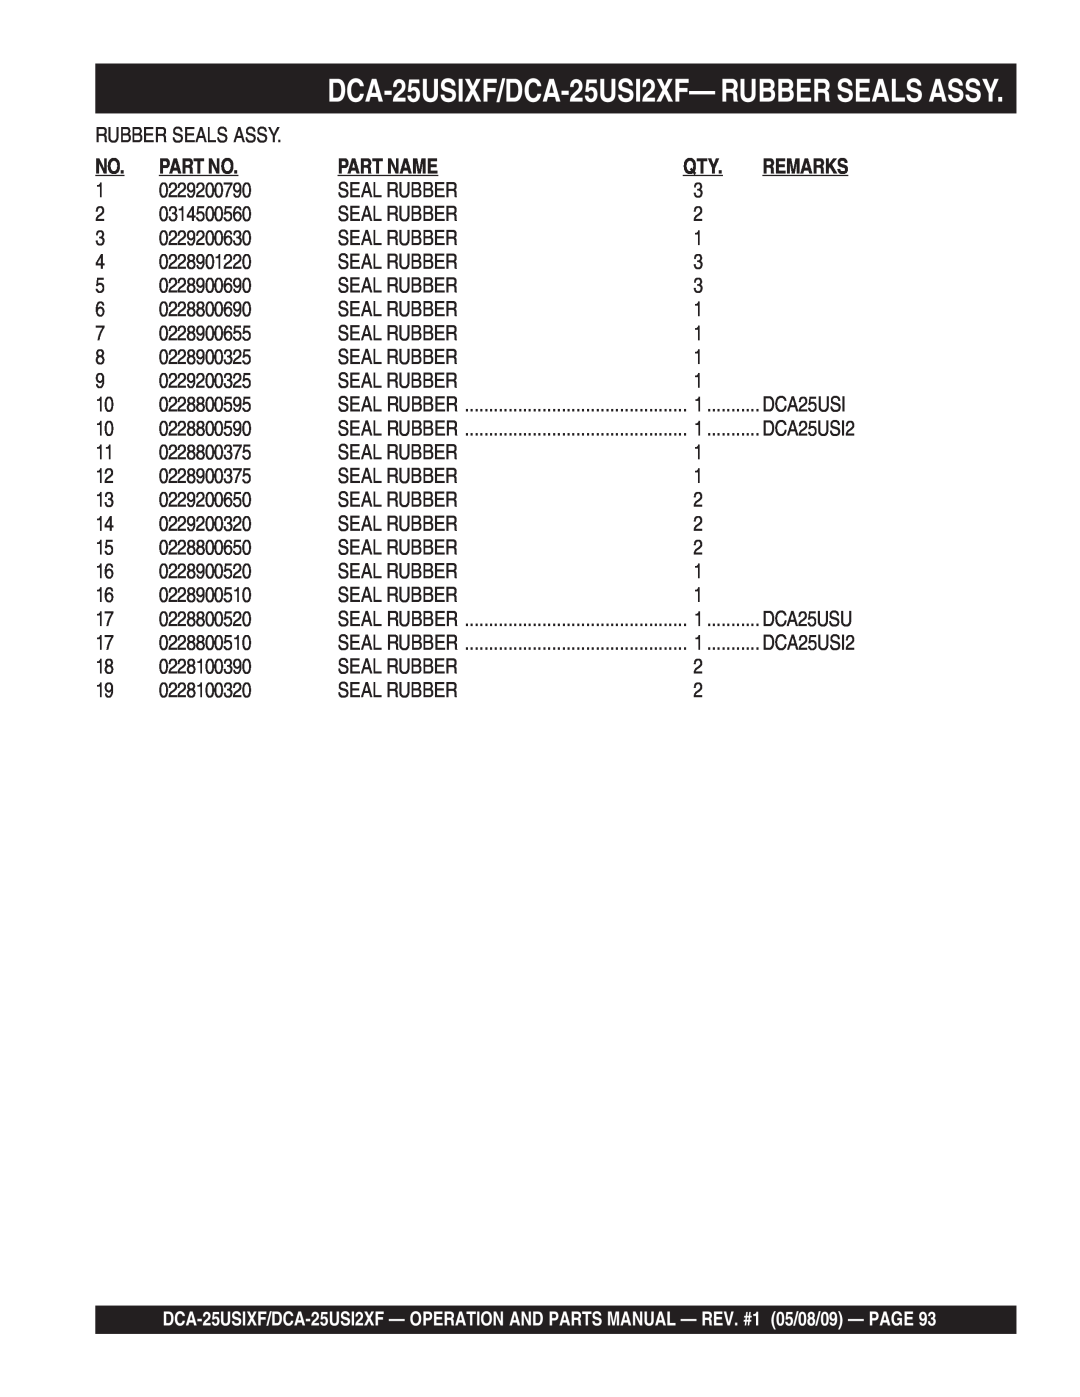 Multiquip operation manual DCA-25USIXF/DCA-25USI2XF- RUBBER SEALS ASSY, Part Name 